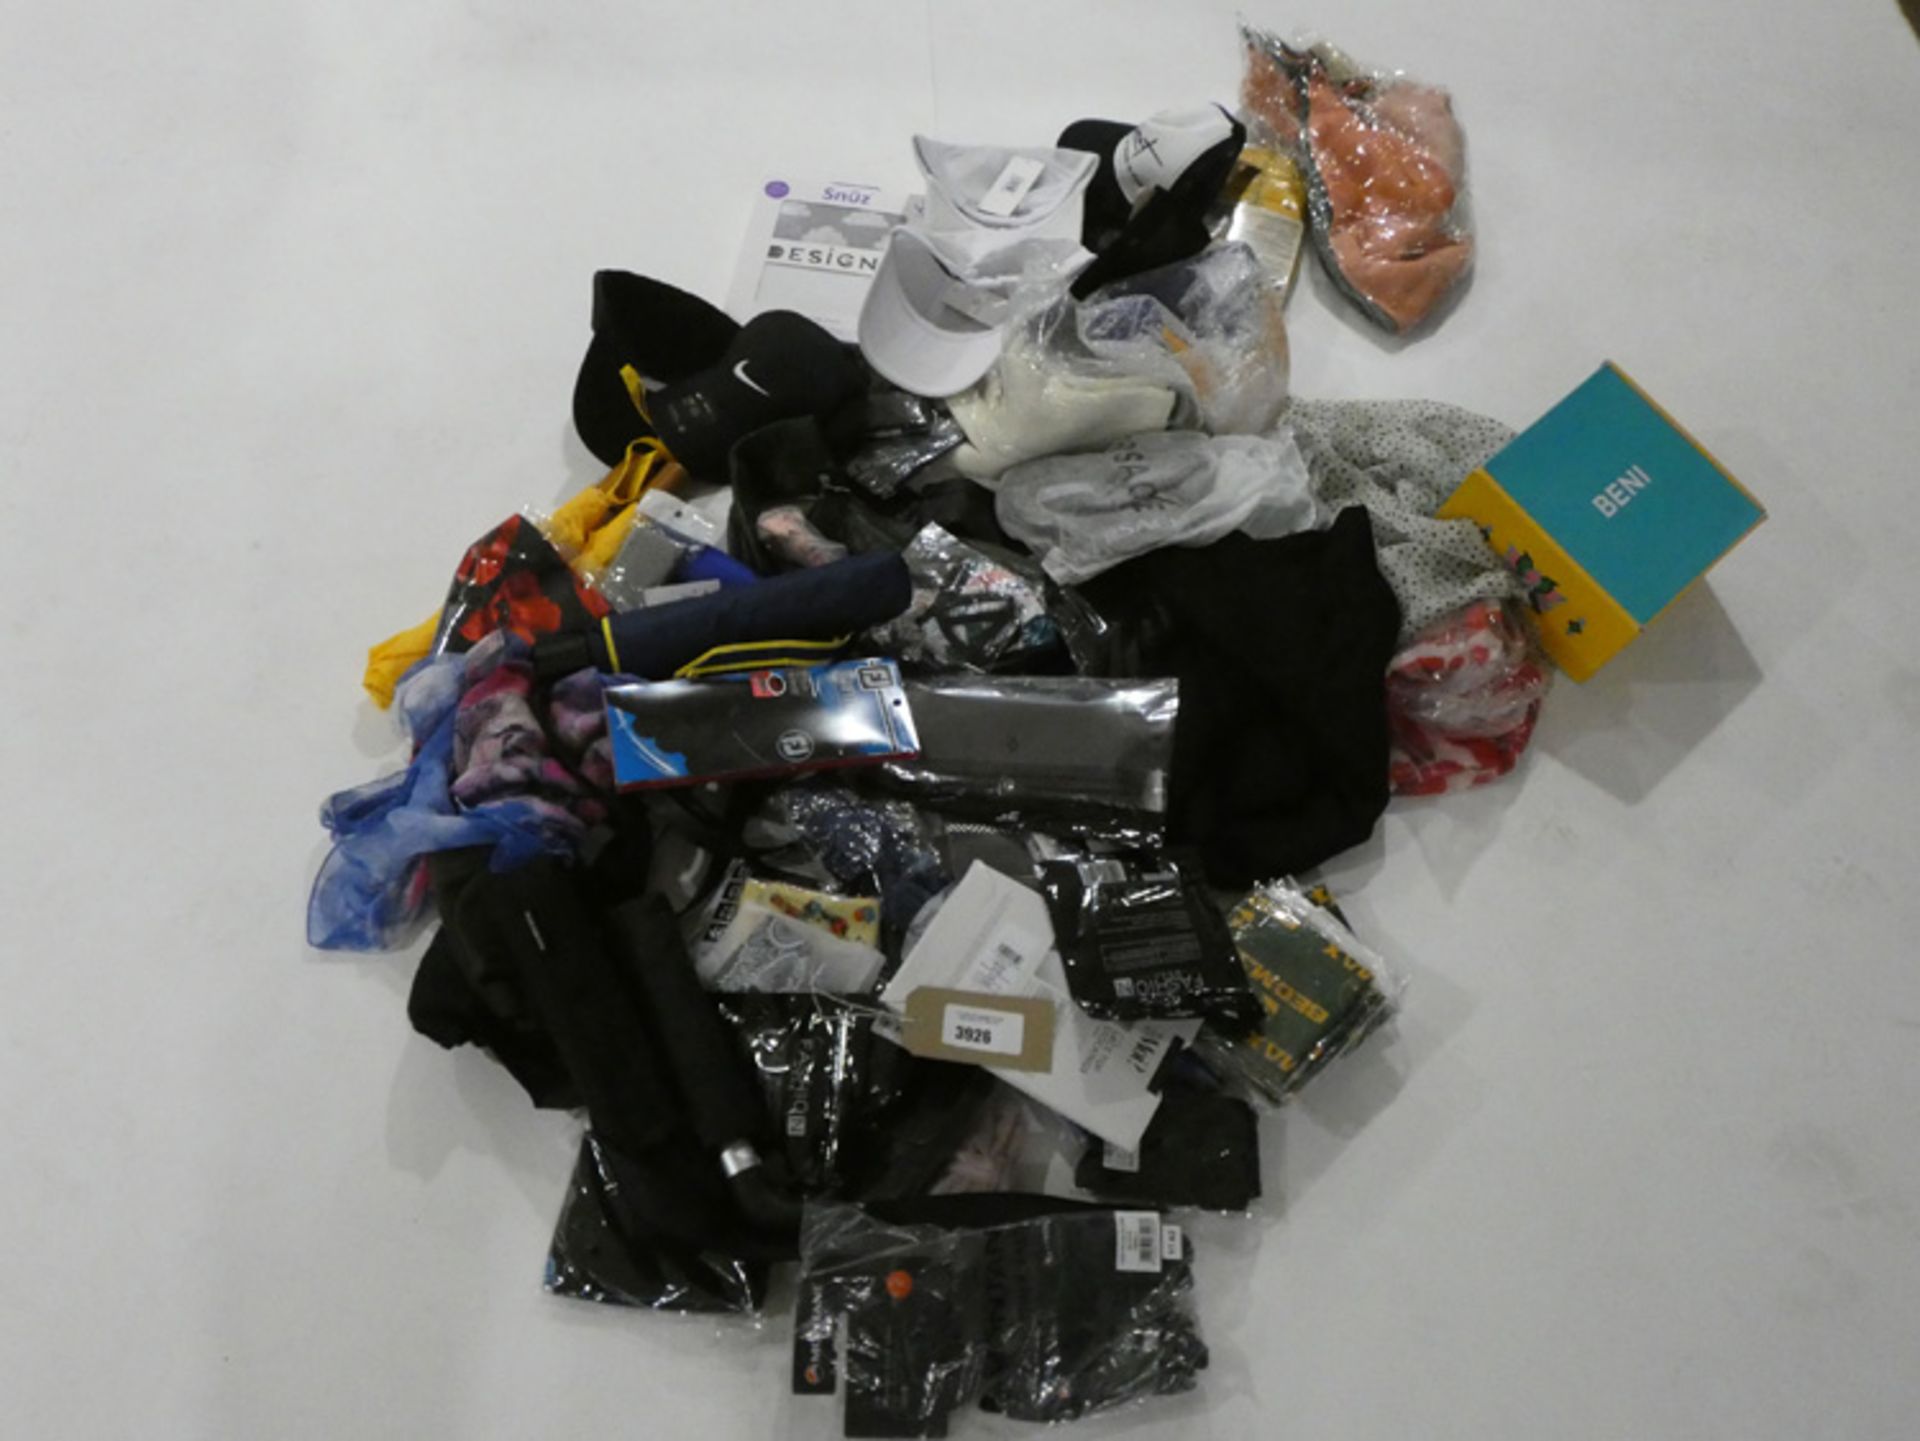 Large bag of accessories including, hats, scarfs, belts, umbrellas, masks, etc